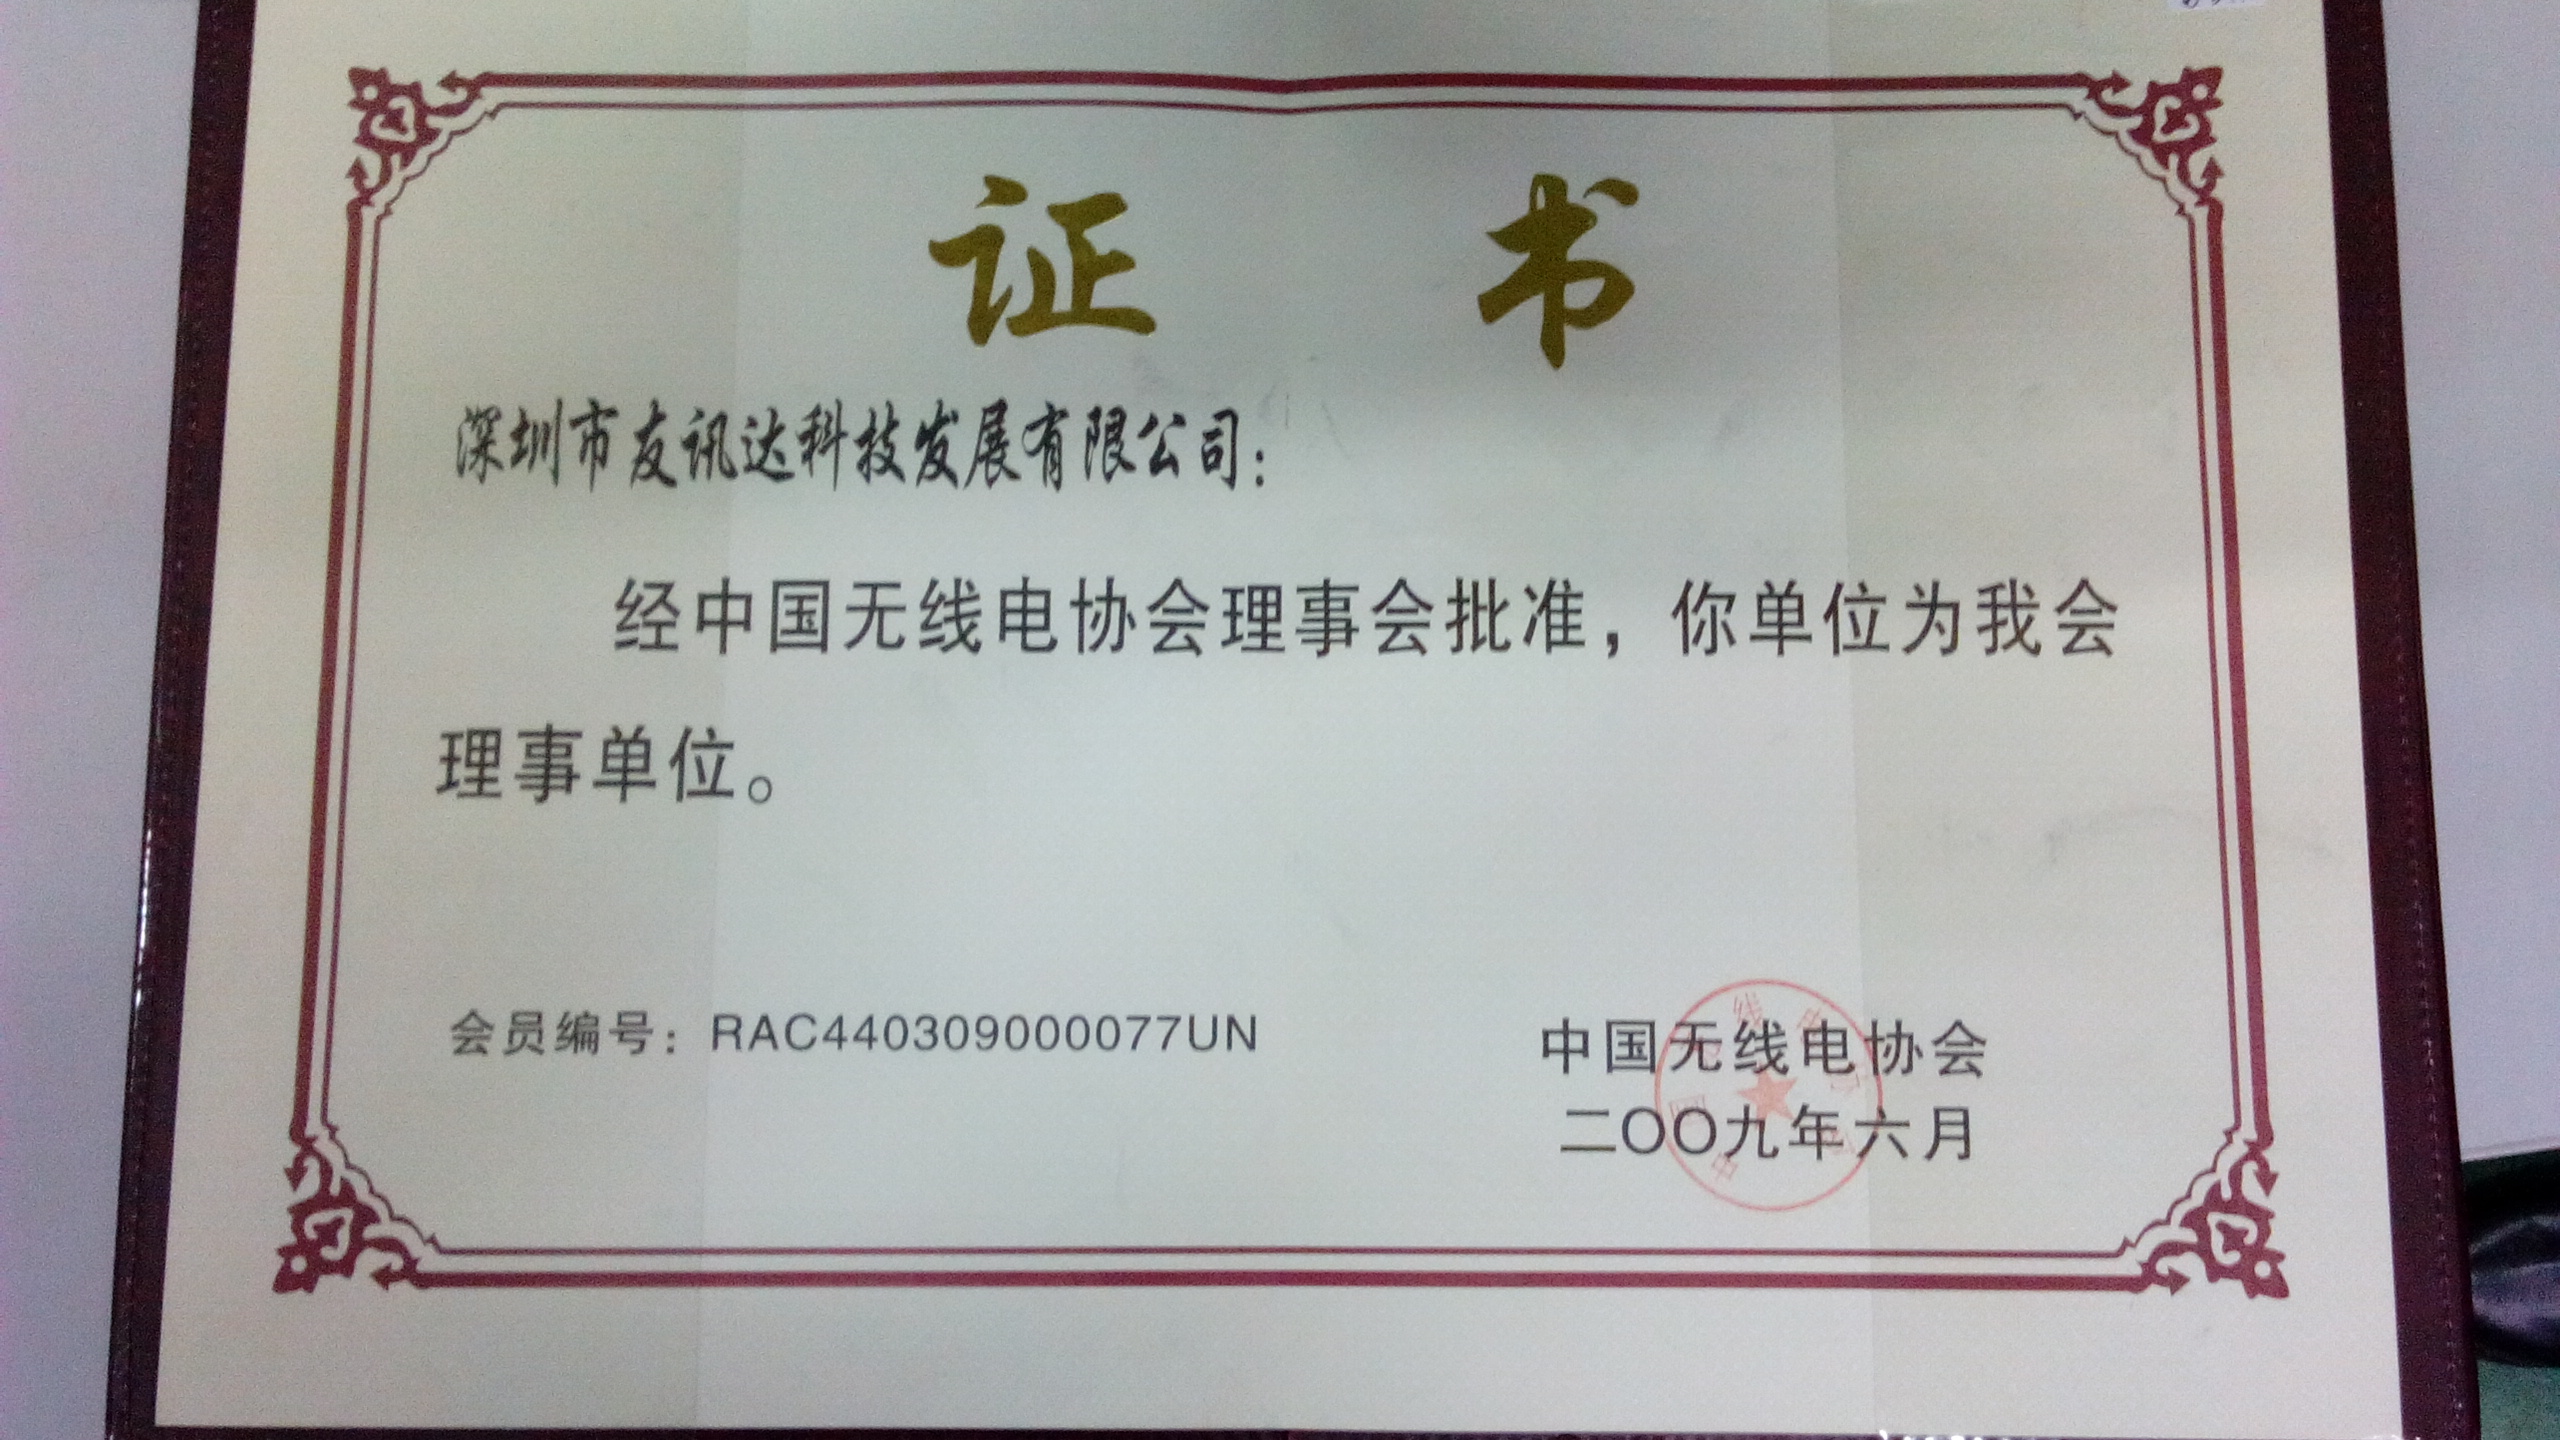 Director Company of China Radio Association